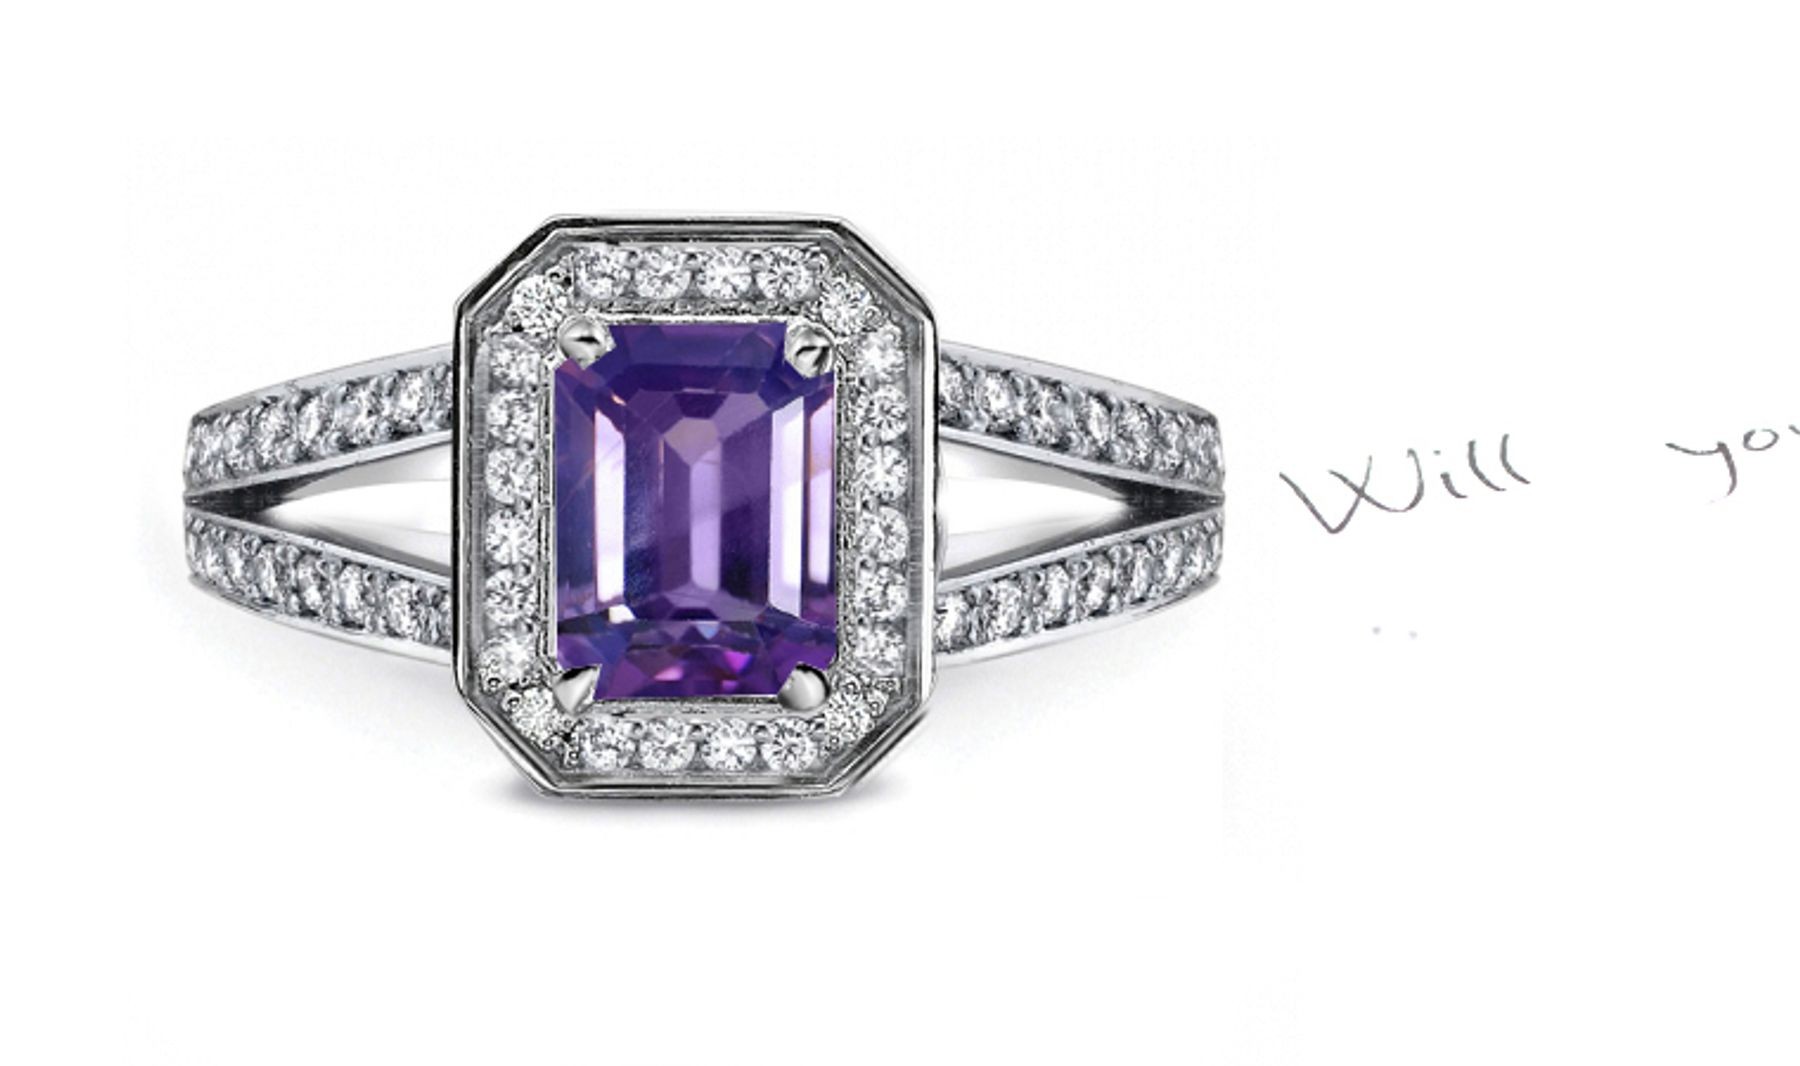 A New Classic: A Fine Purple Sapphire Diamond Ring